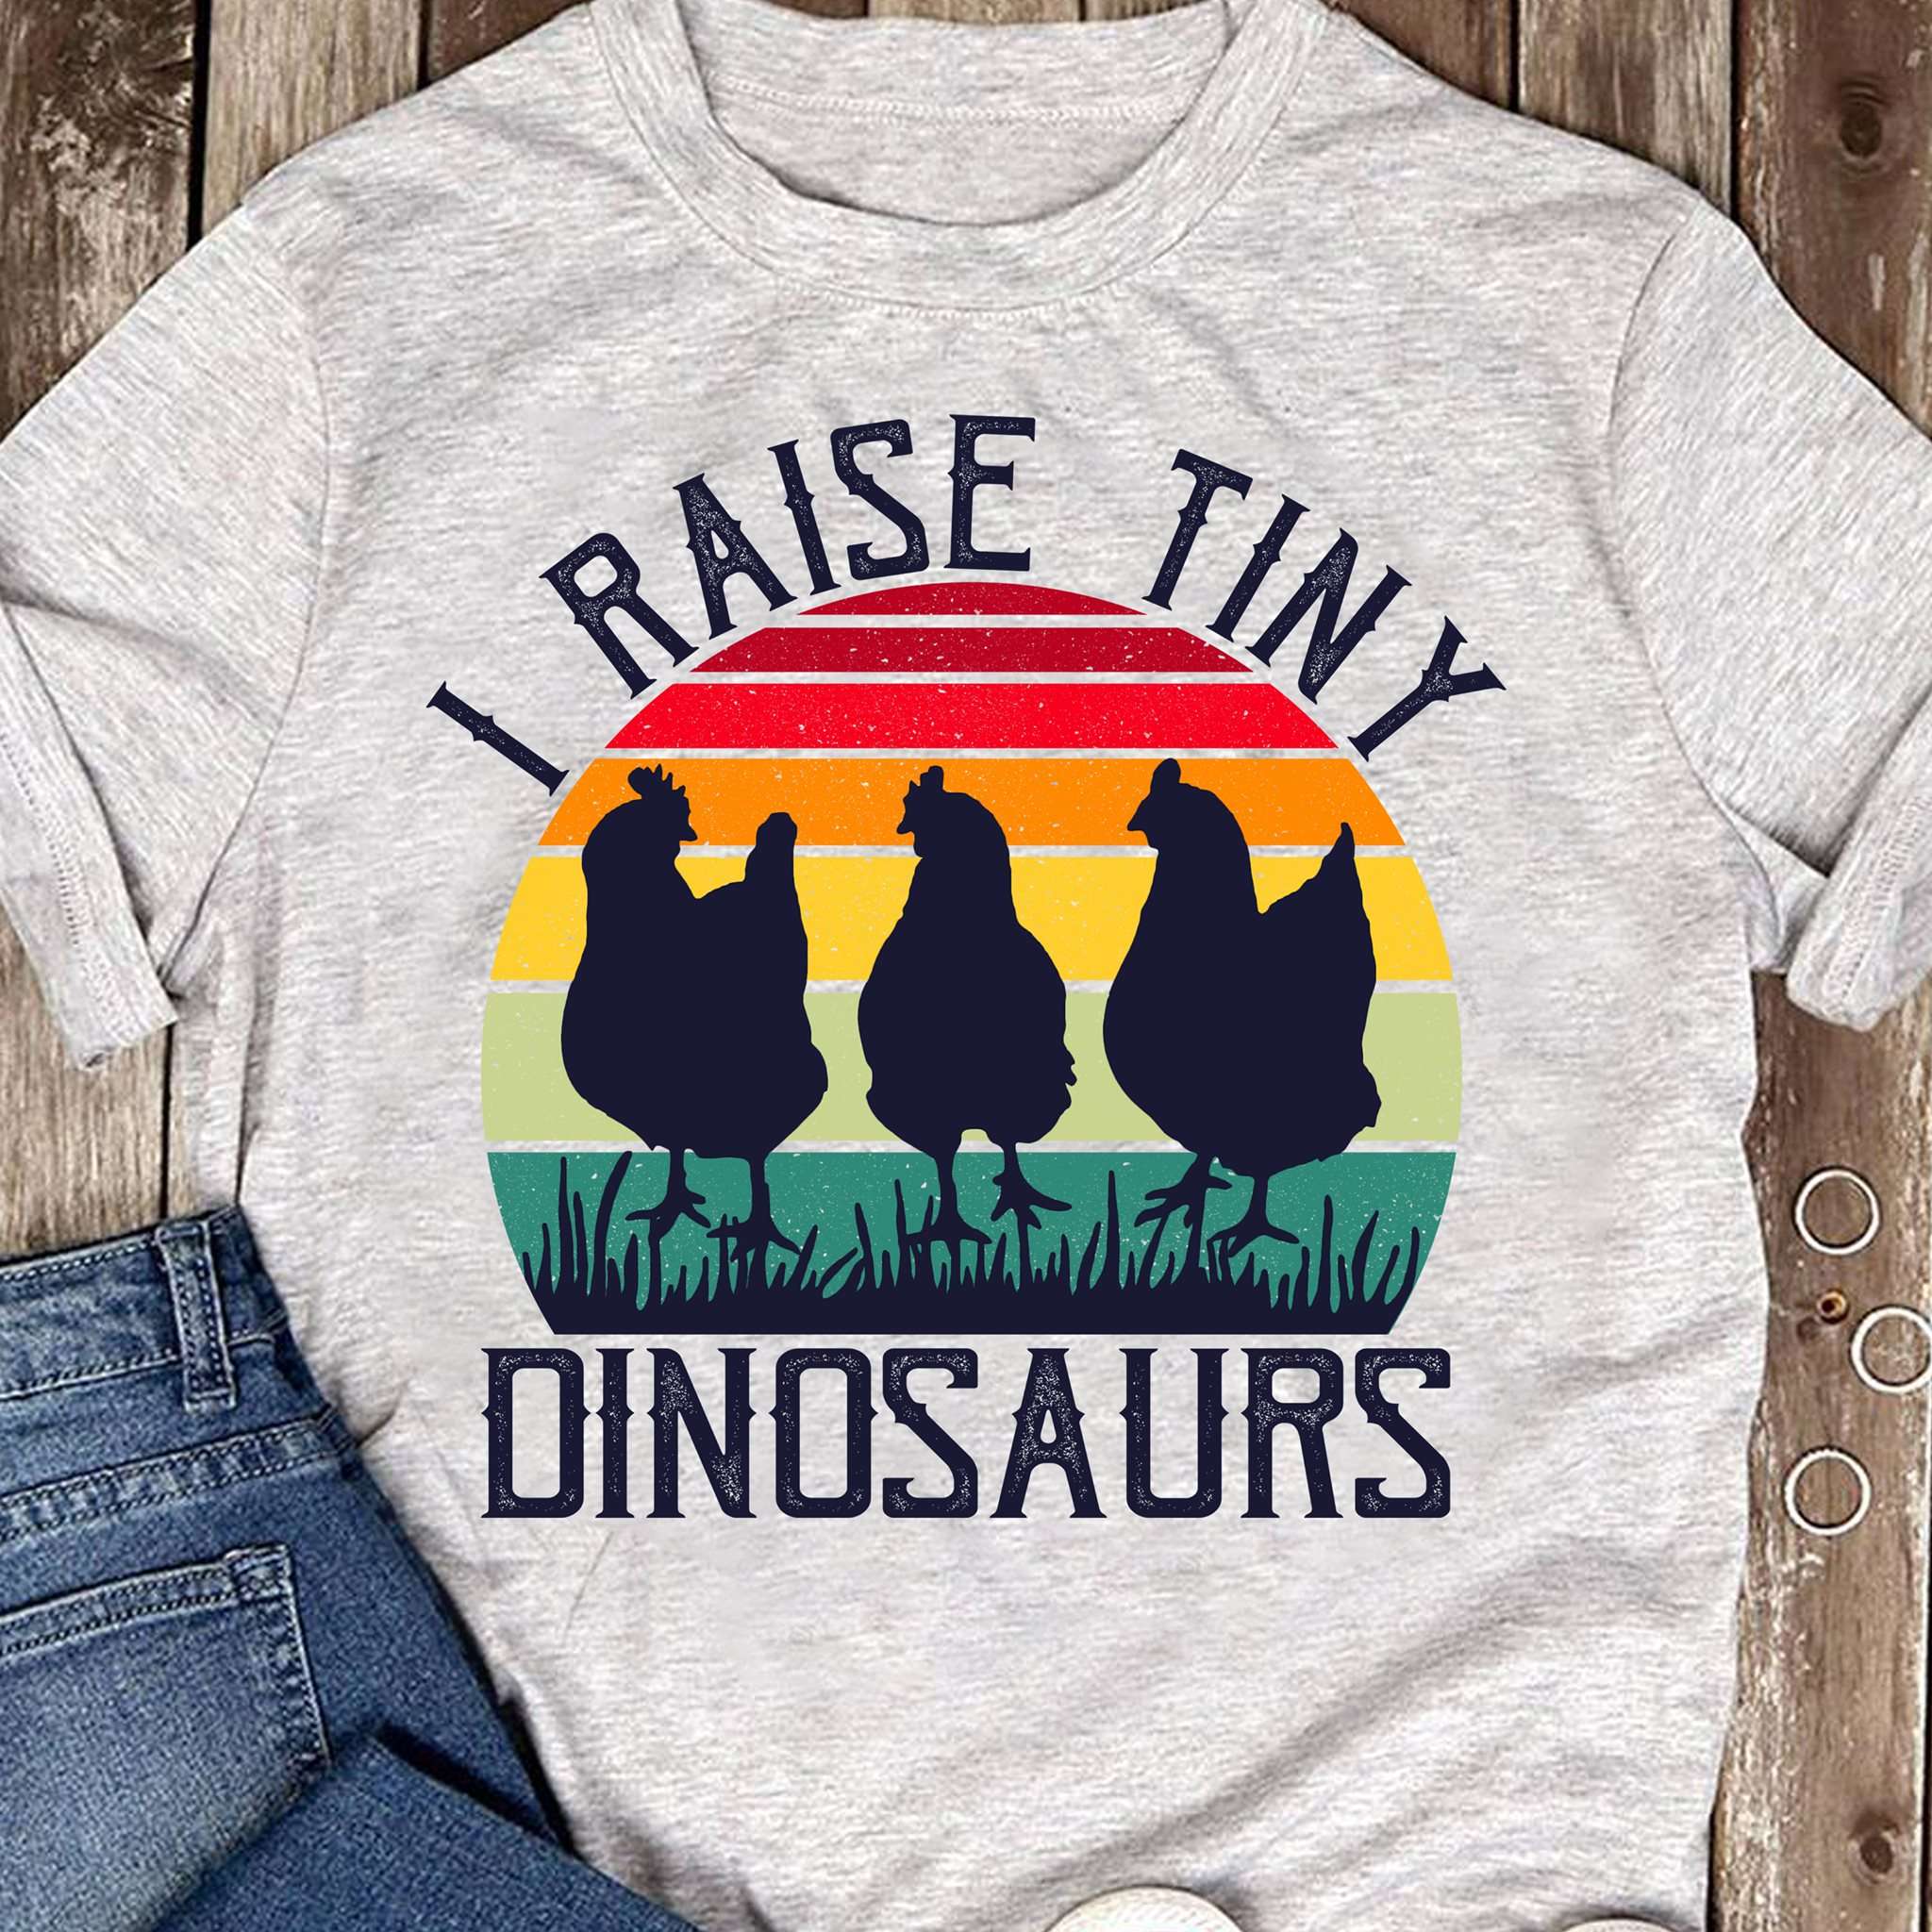 I raise tiny dinosaurs - Chicken tiny dinosaurs, gift for chicken raiser